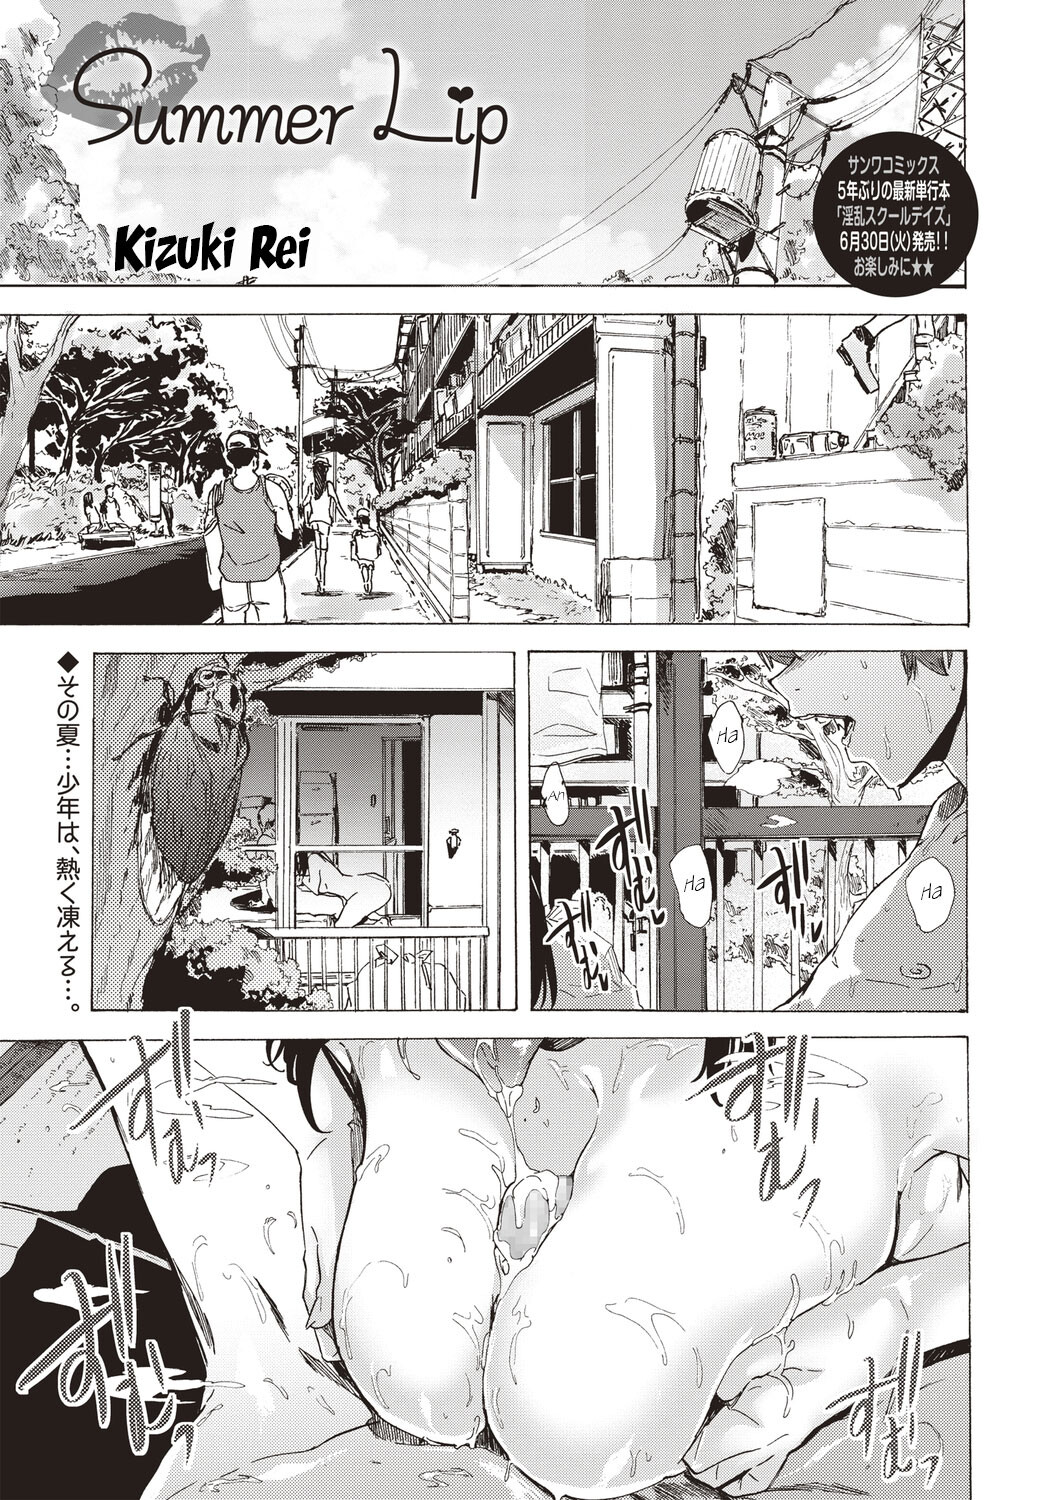 Hentai Manga Comic-Summer Lip-Read-1